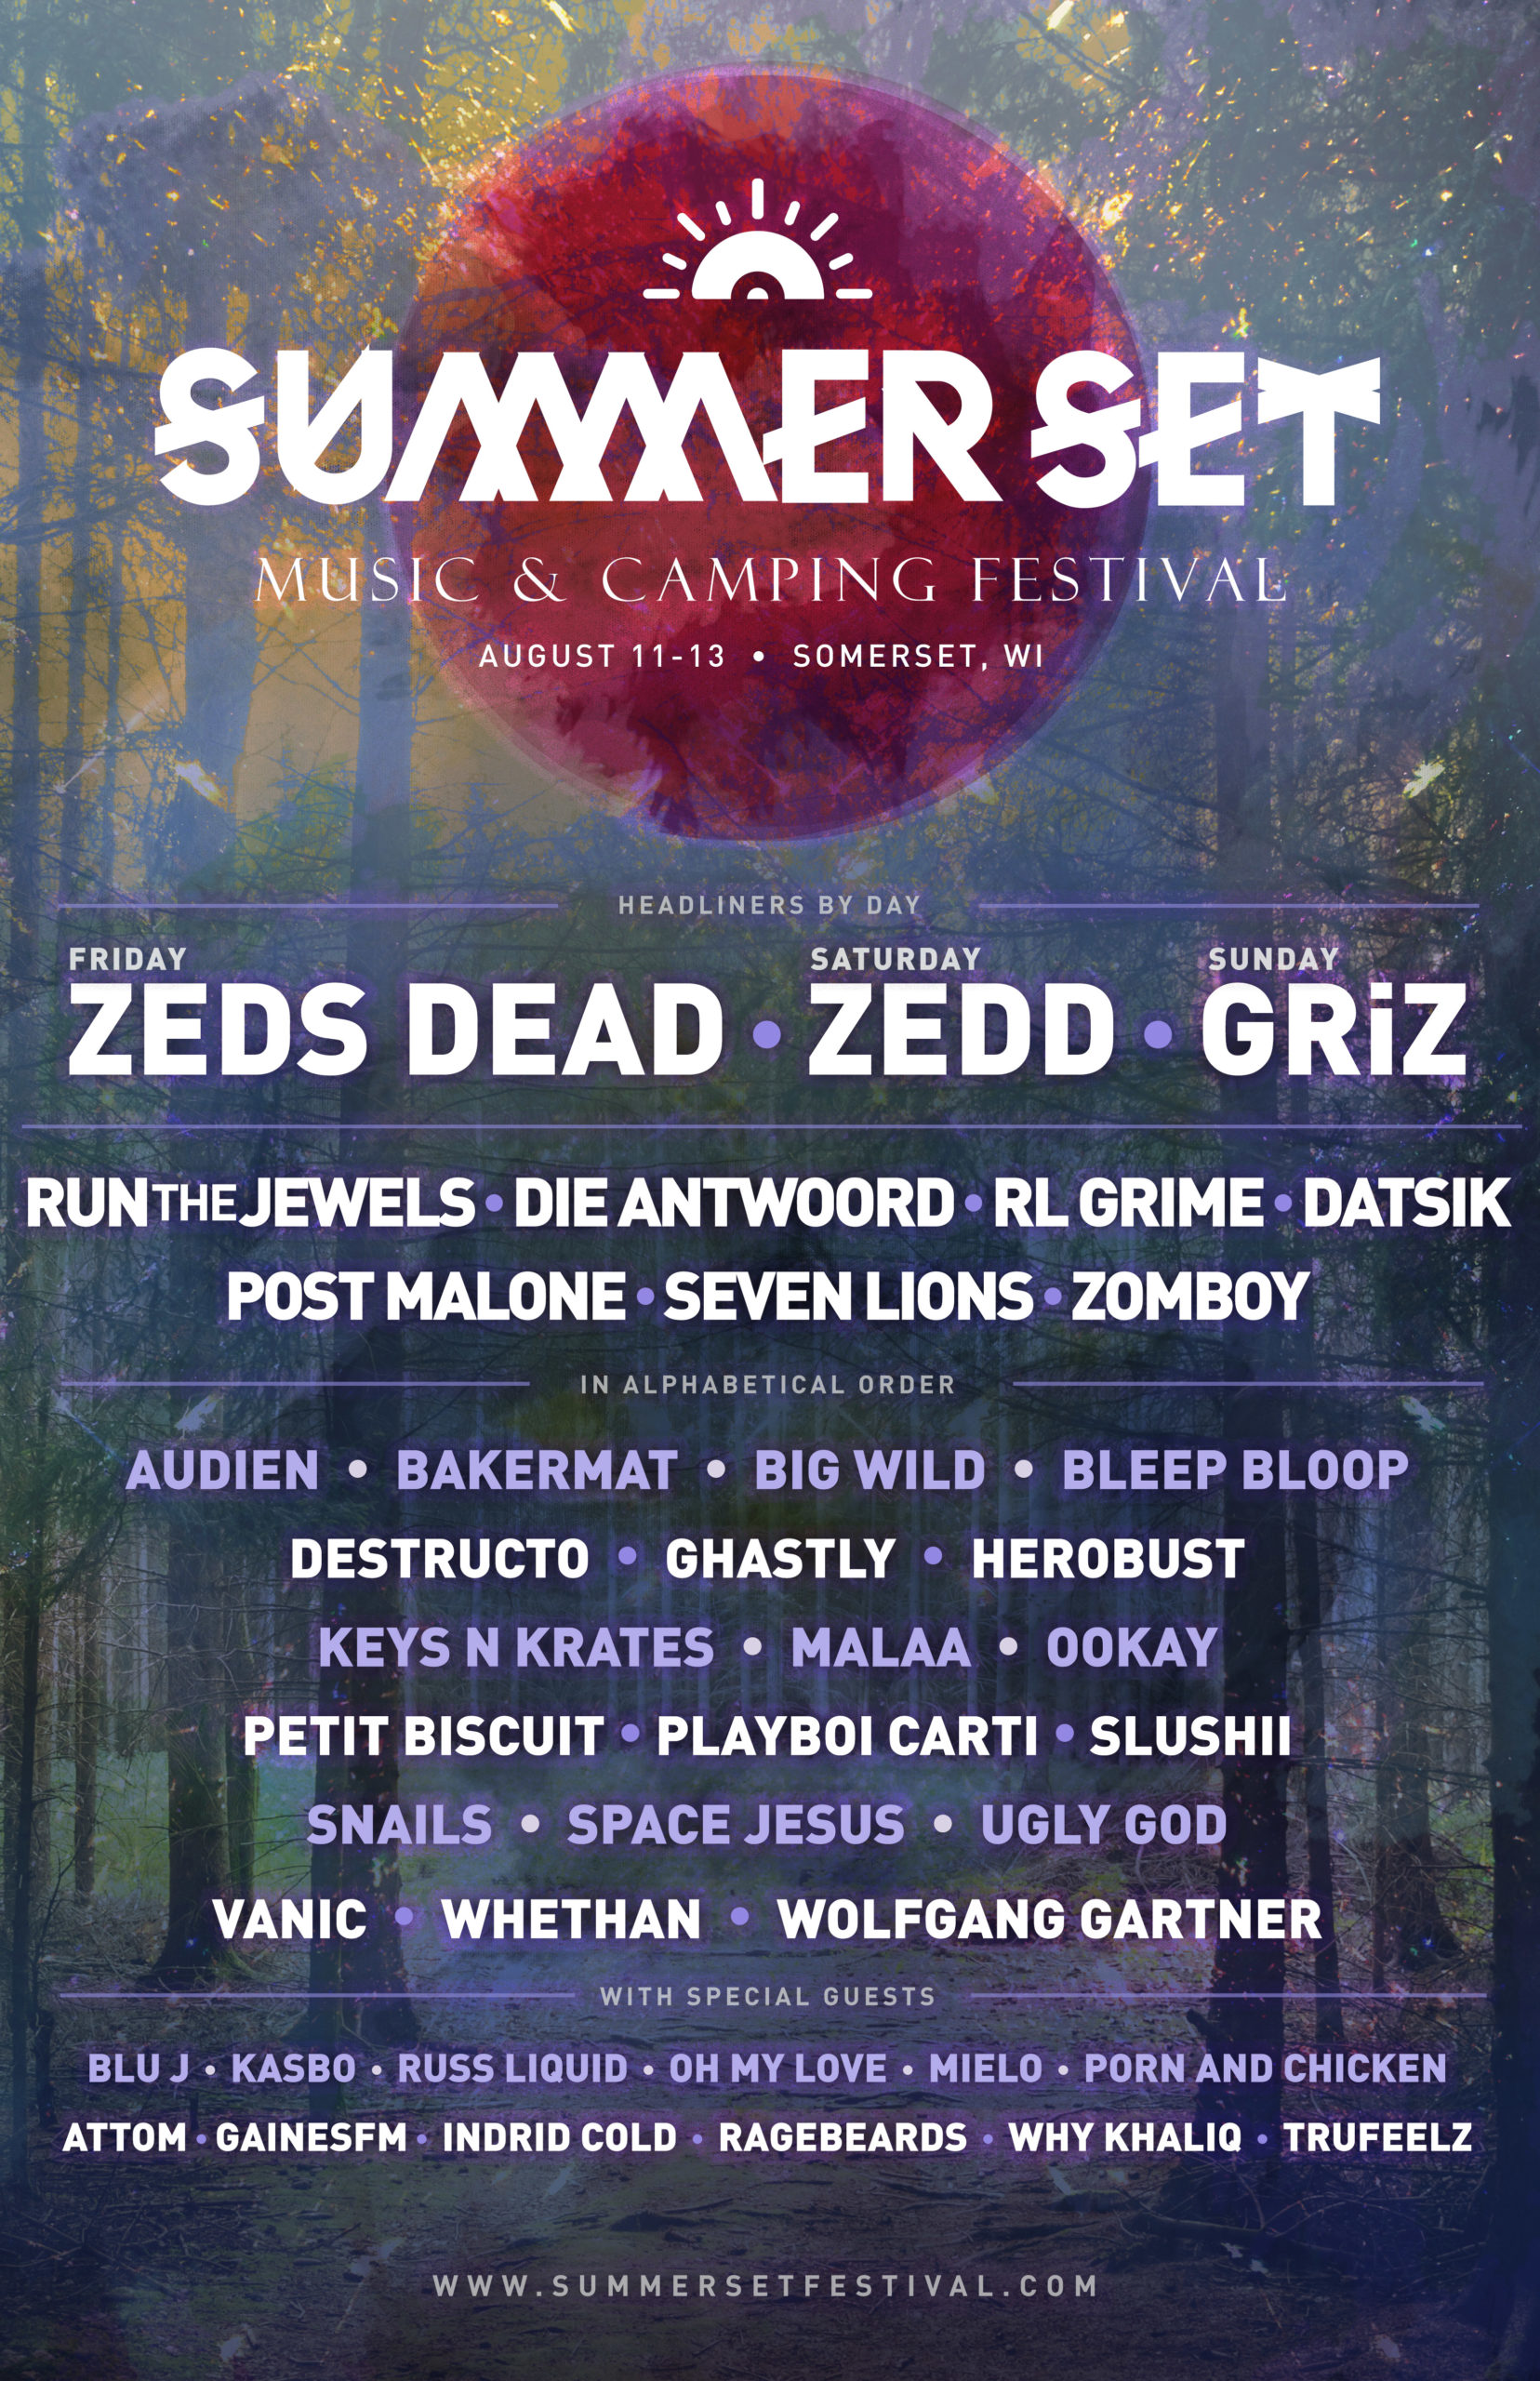 Summer Set Music Festival Release 2017 Lineup